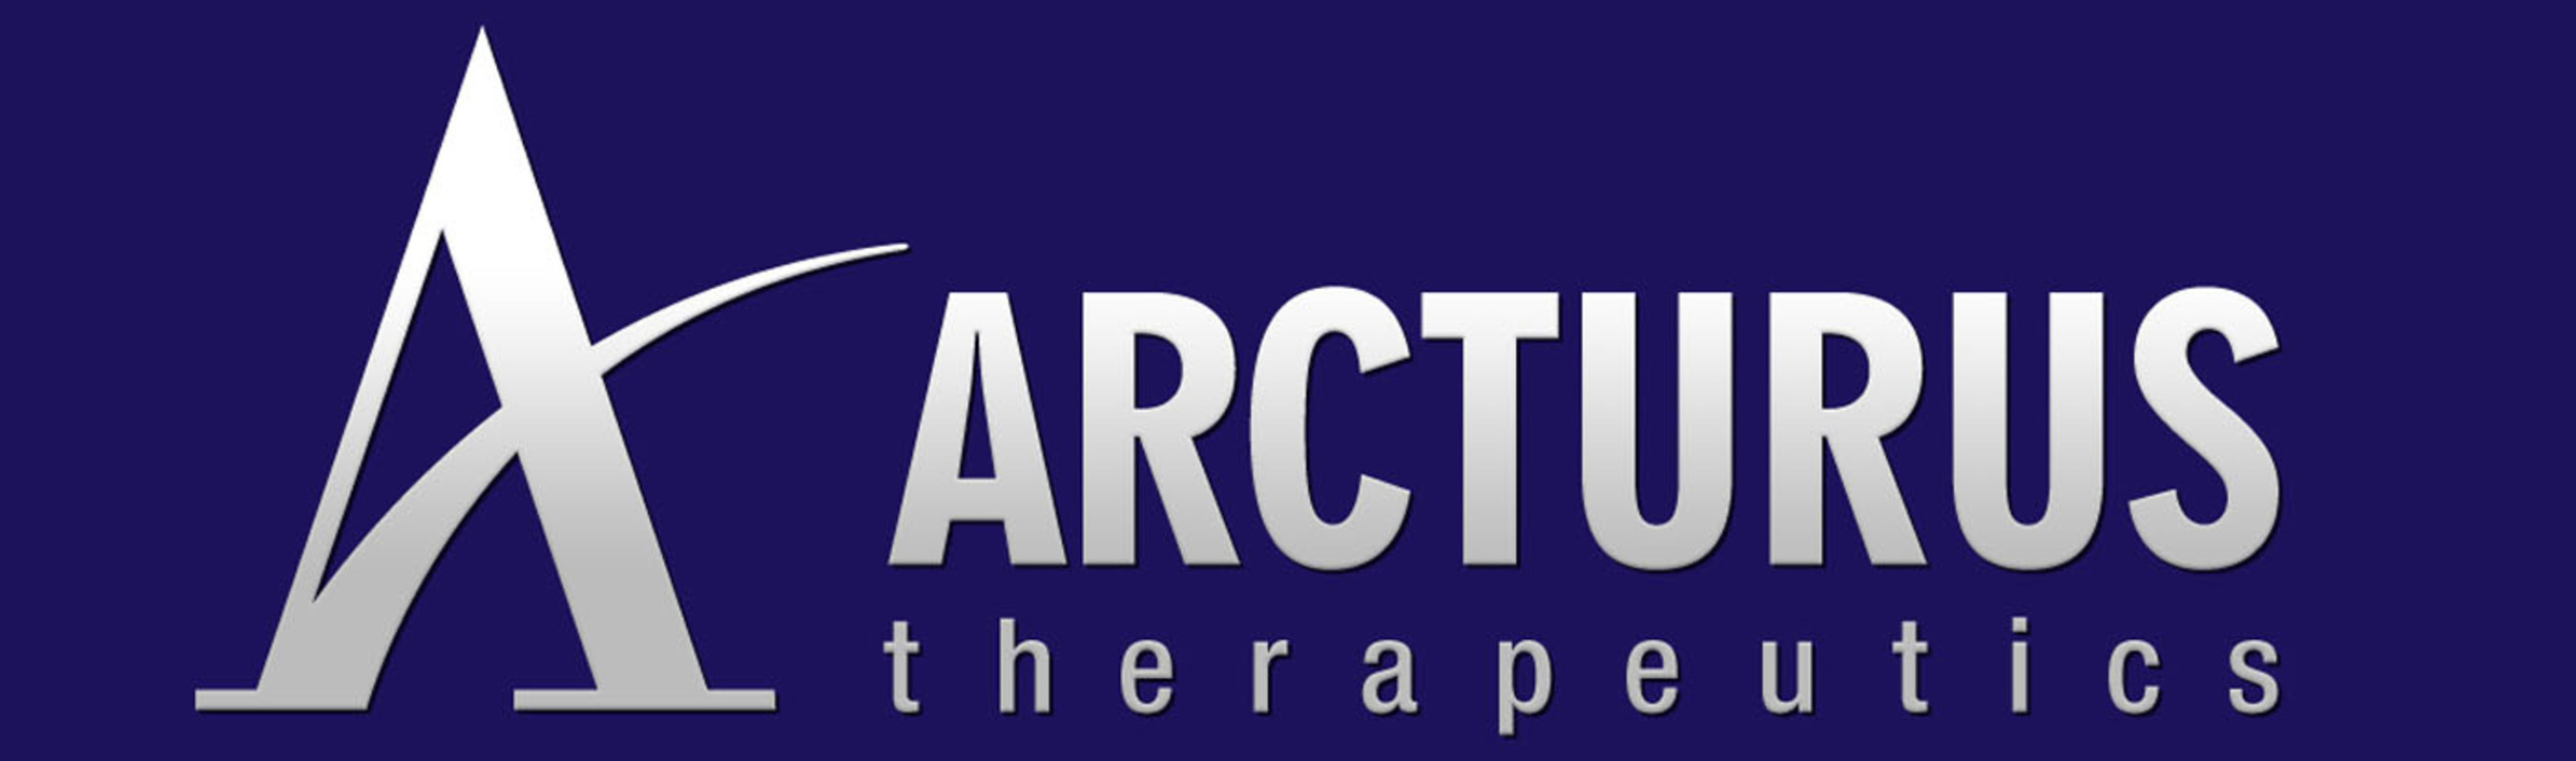 Arcturus Therapeutics Logo. (PRNewsFoto/Arcturus Therapeutics) (PRNewsFoto/)